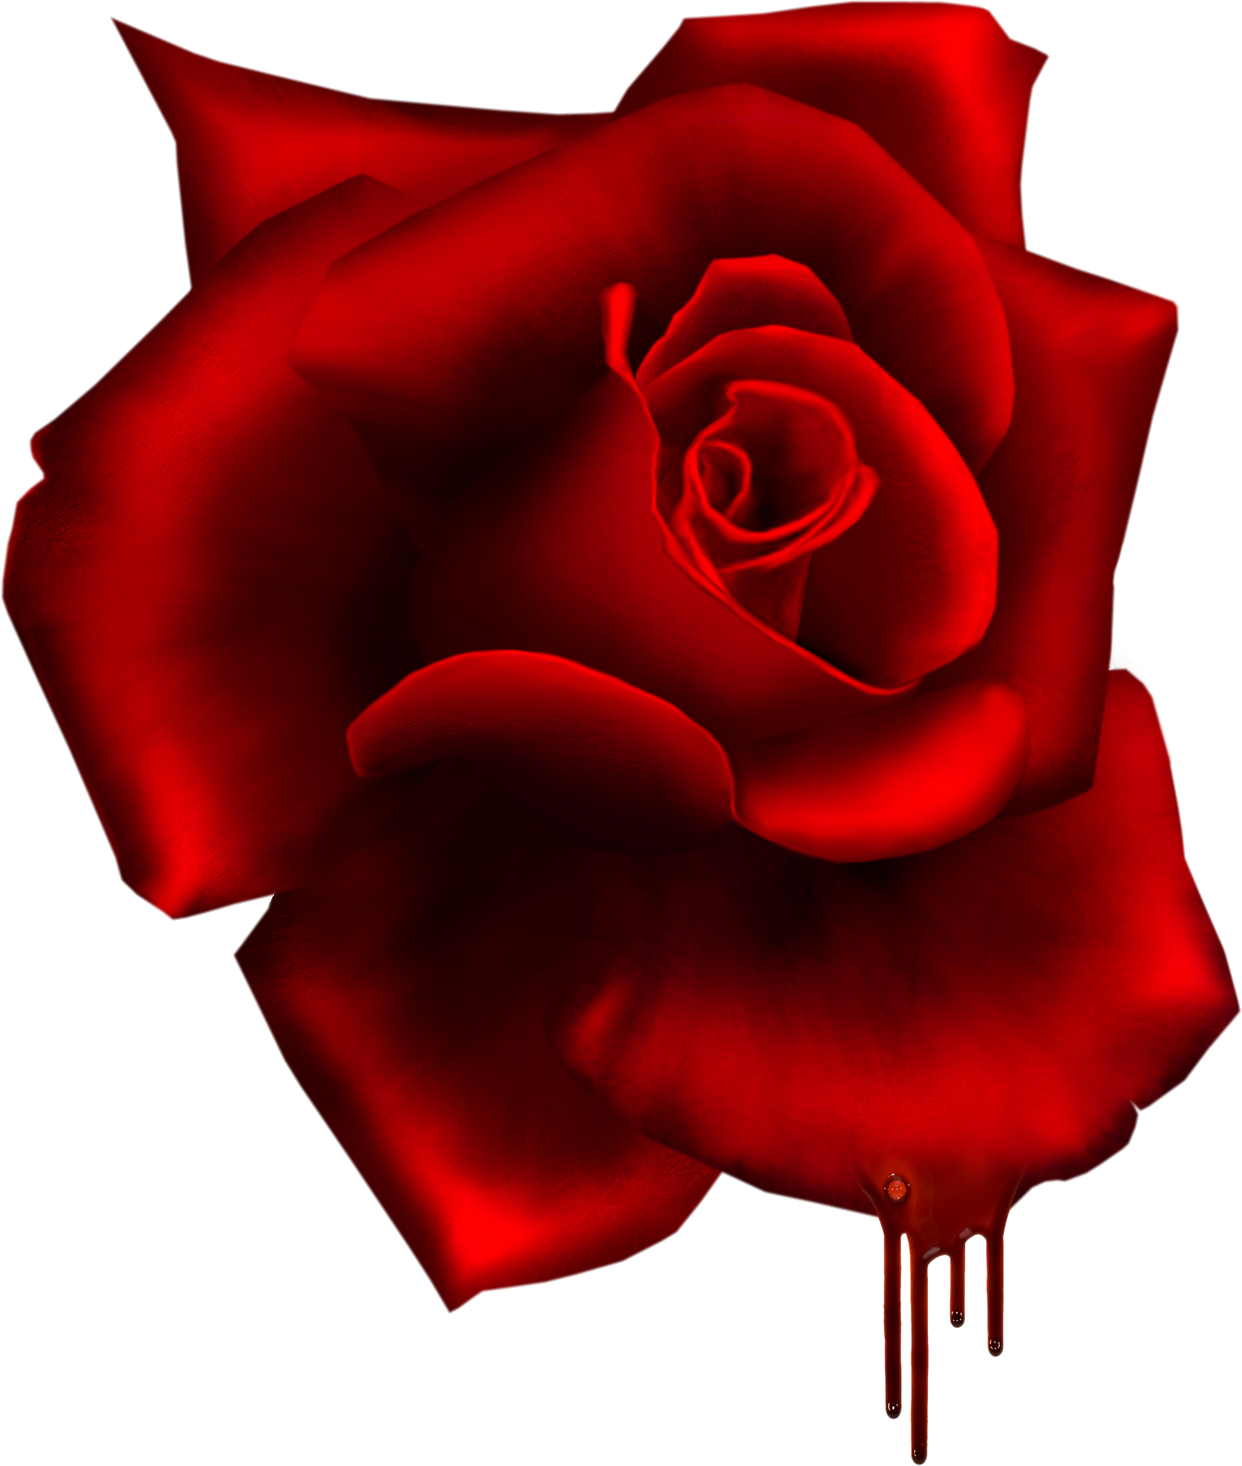 Render Rose Terreur Rouge Sang Nature Autresinconnu - Floribunda (1242x1466)